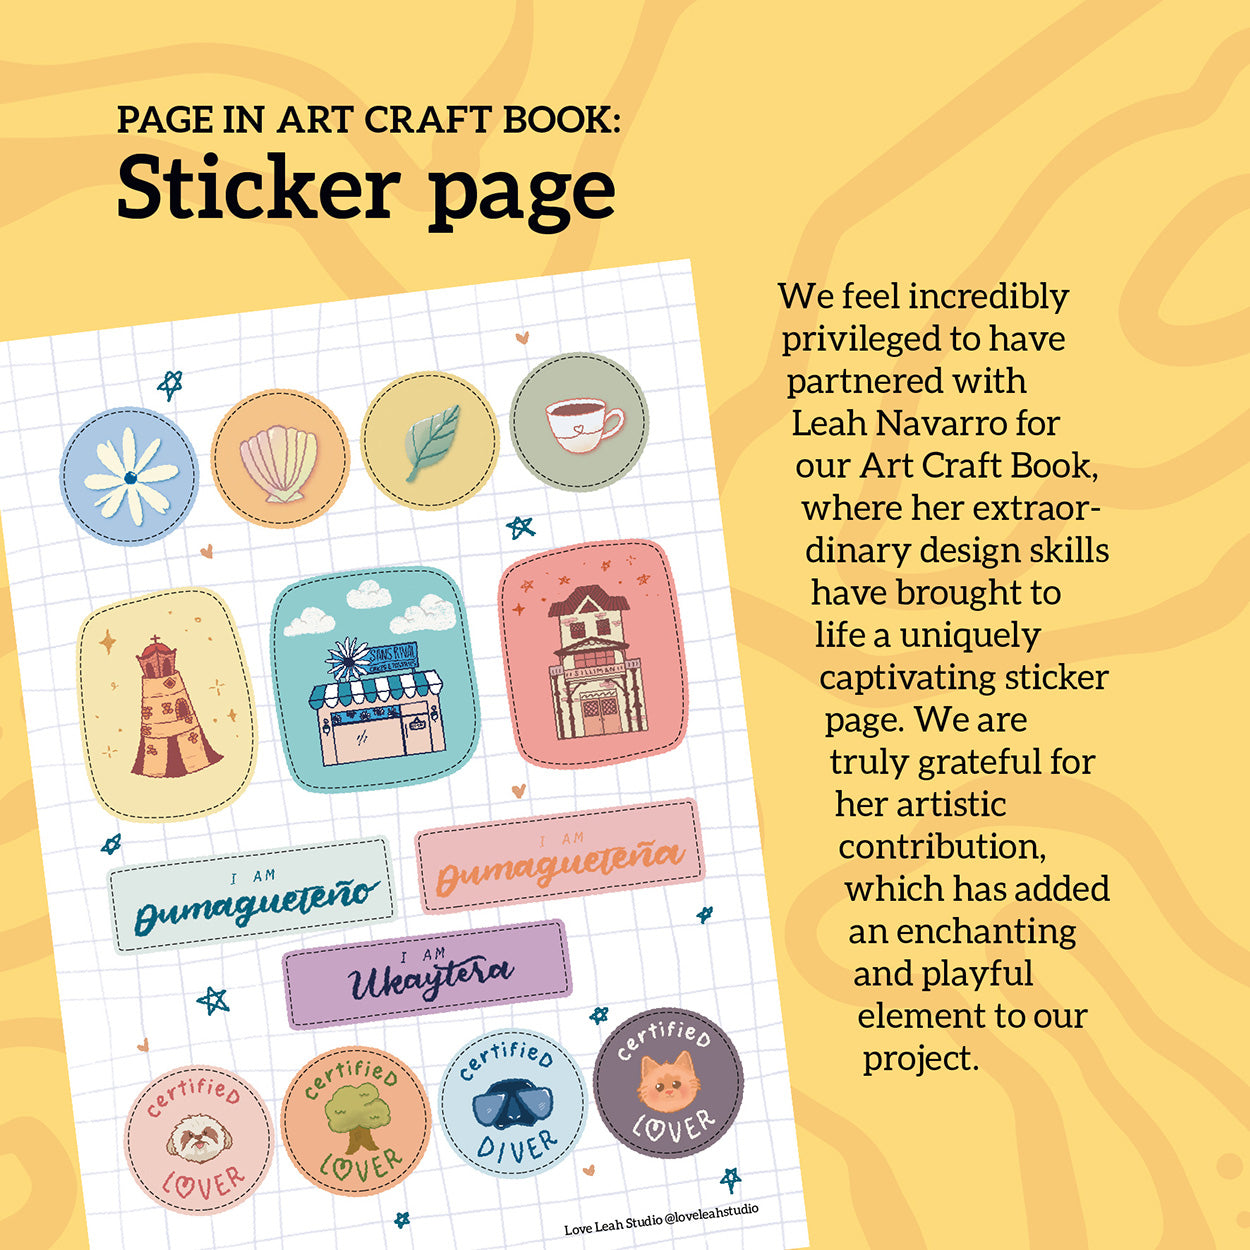 Love Leah Studio Leah Navarro Digital Artist Dumaguete City paper sticker page in Art Craft Book Gentle People Pinspired